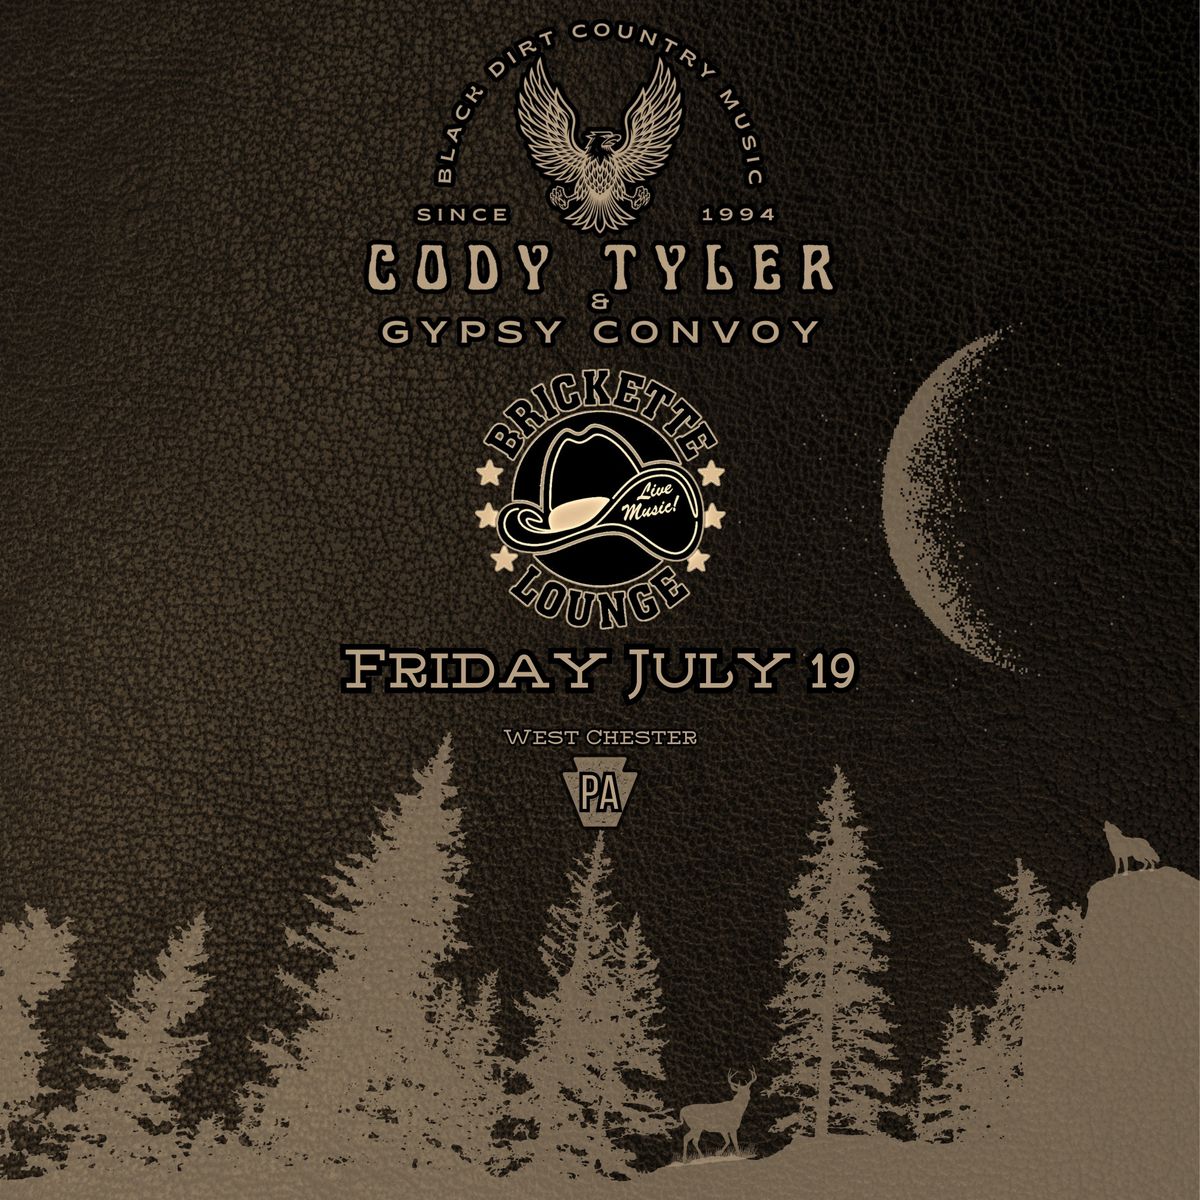 Cody Tyler & Gypsy Convoy @ Brickette Lounge